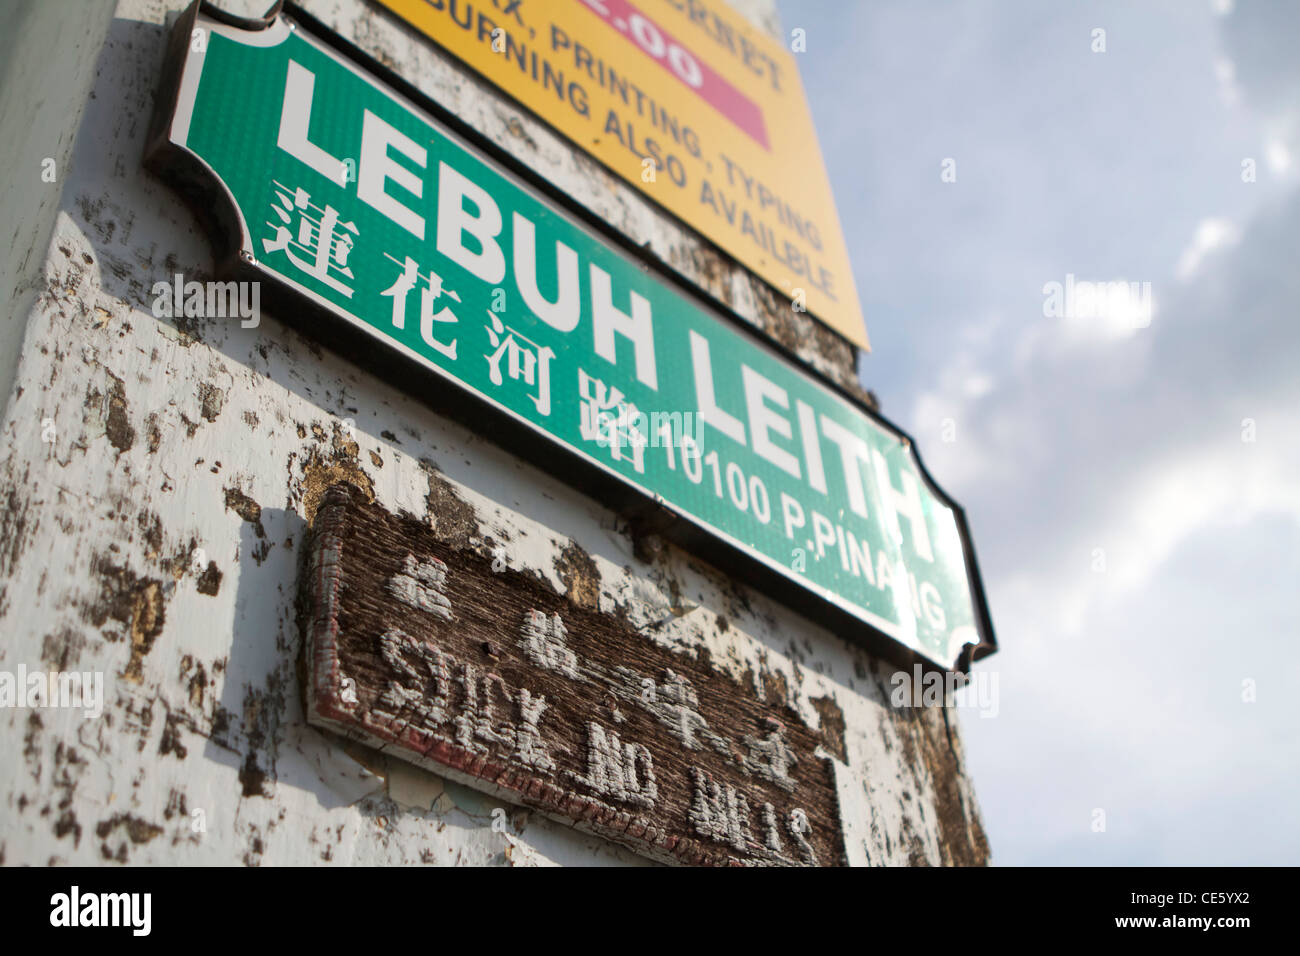 Penang street sign Stock Photo